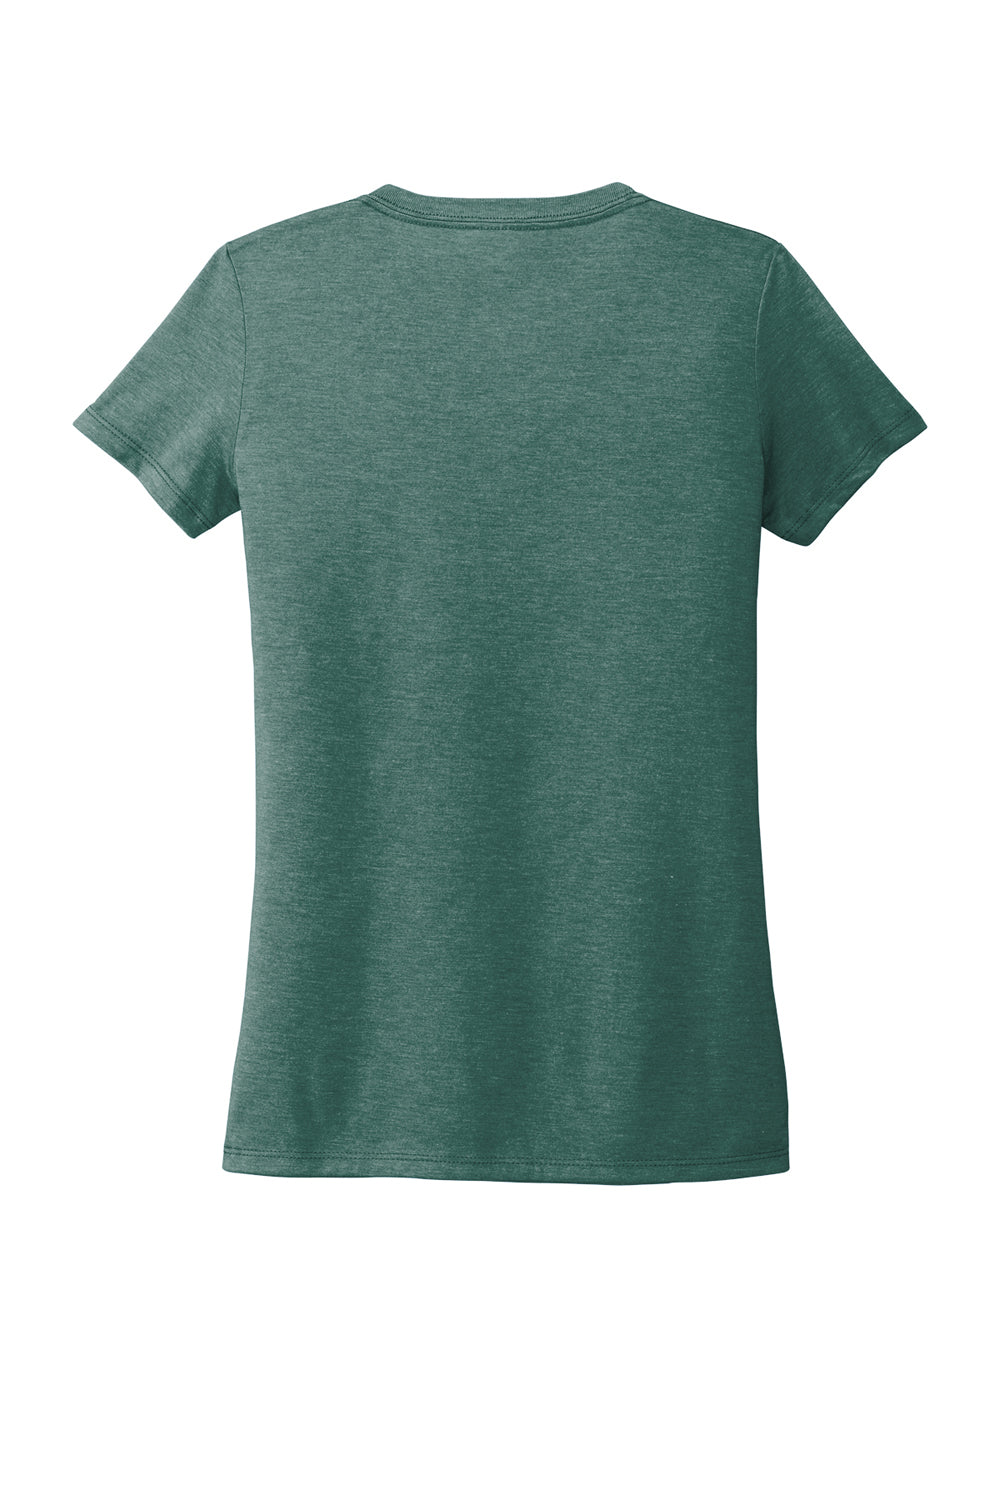 Allmade AL2018 Womens Short Sleeve V-Neck T-Shirt Deep Sea Green Flat Back